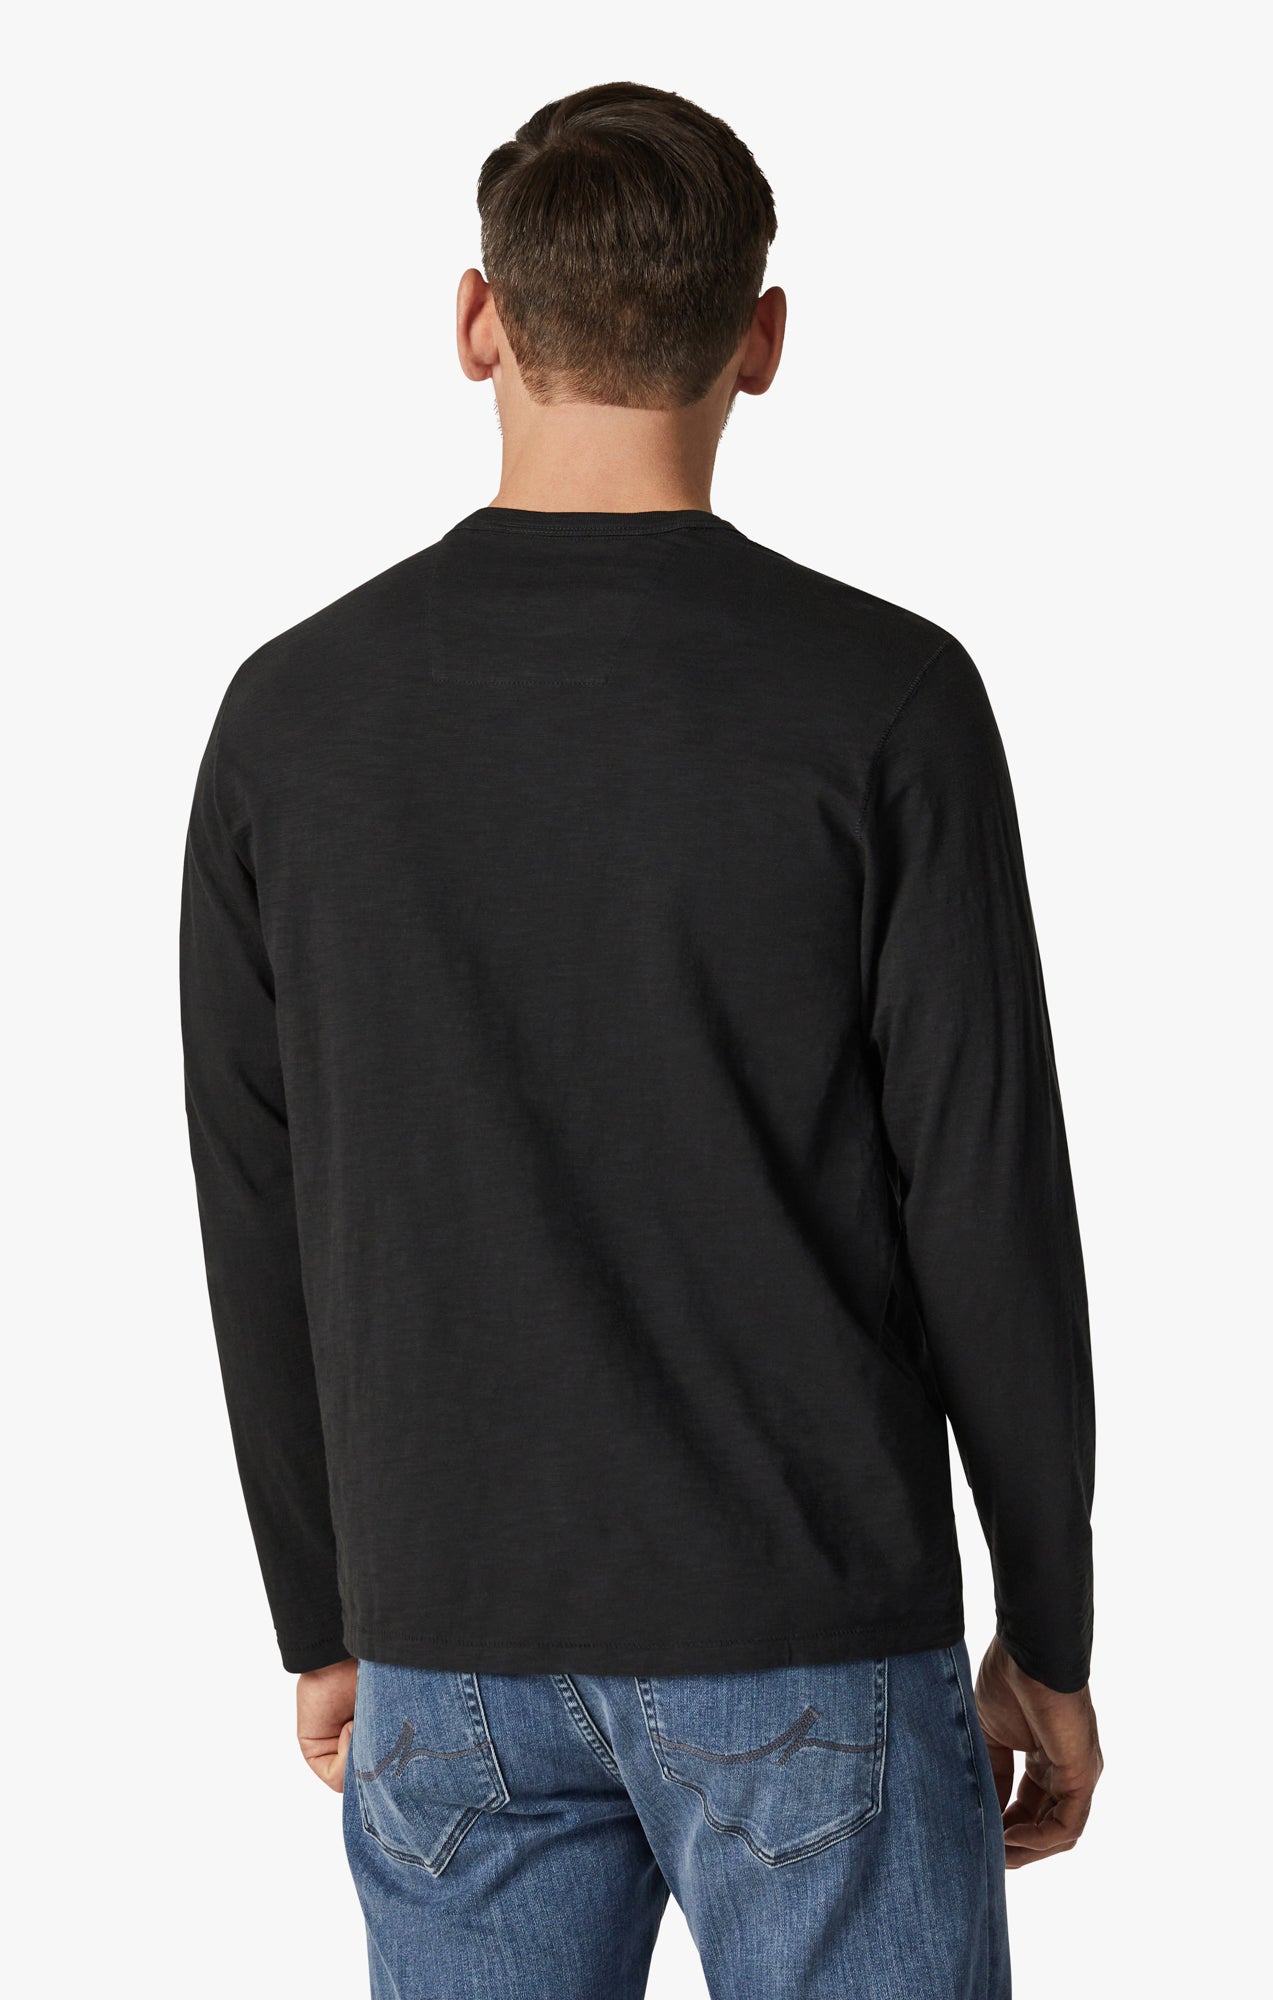 Slub Crew Neck Long Sleeve Shirt in Black Image 3